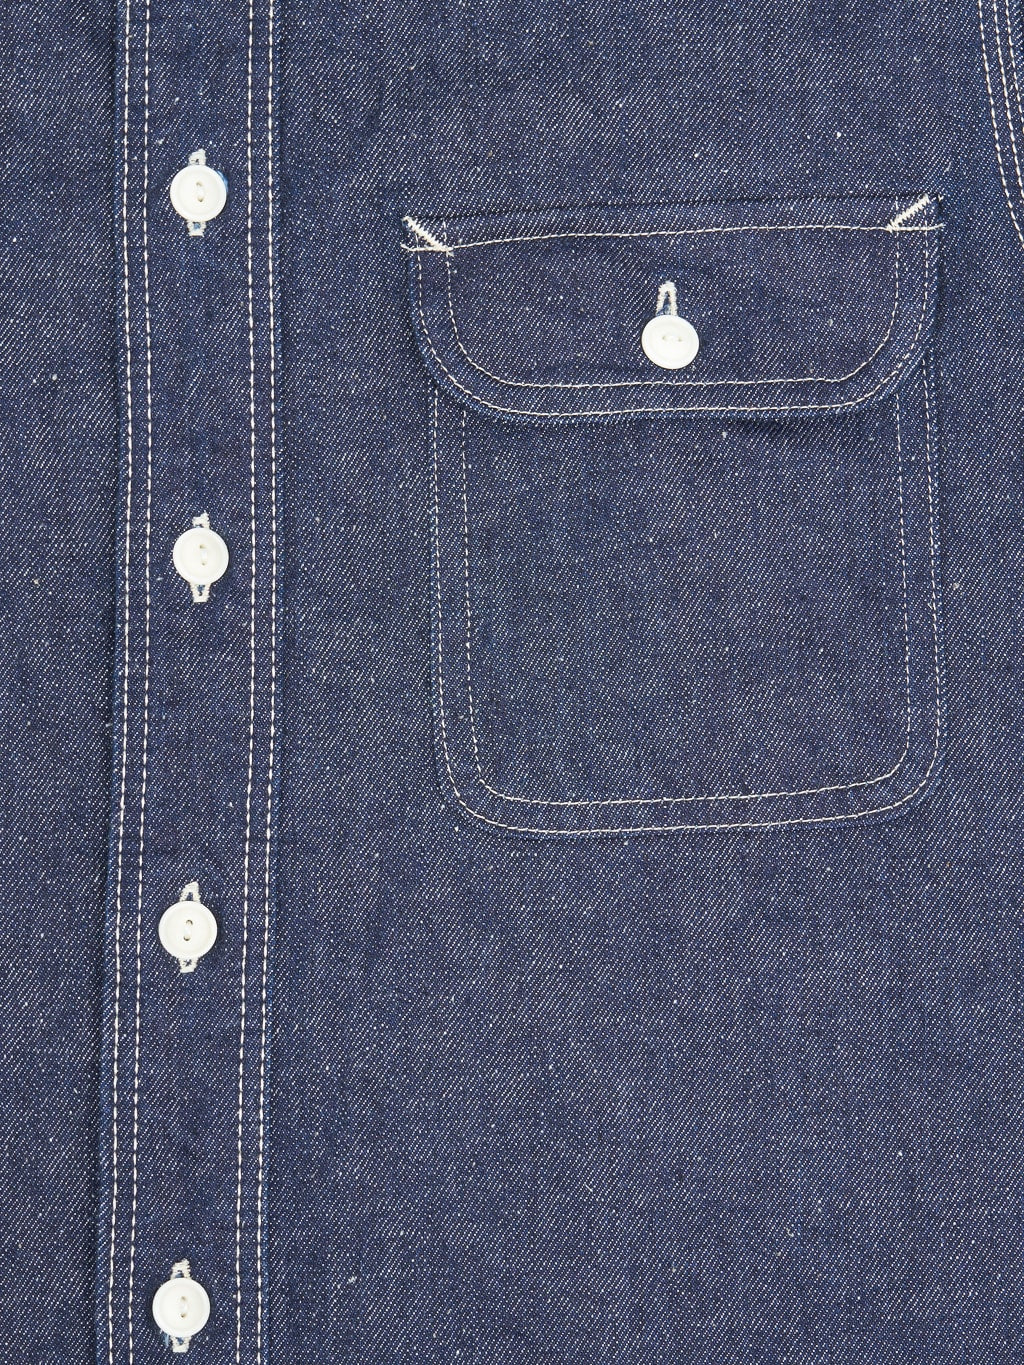 Samurai jeans denim work shirt pocket button